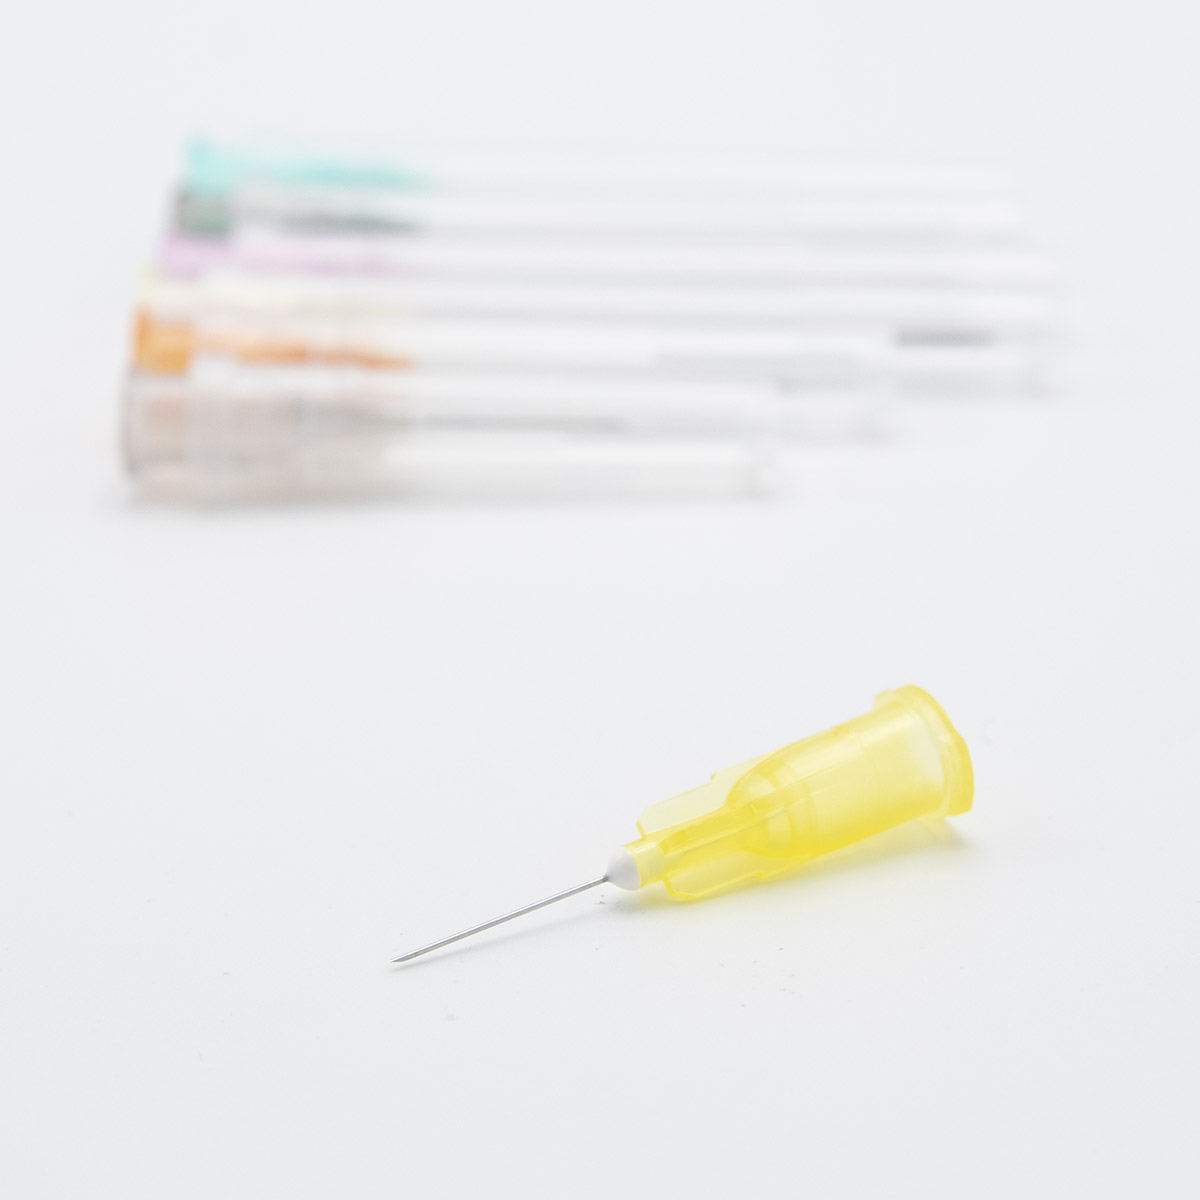 SteriFlow™ hypodermic needles